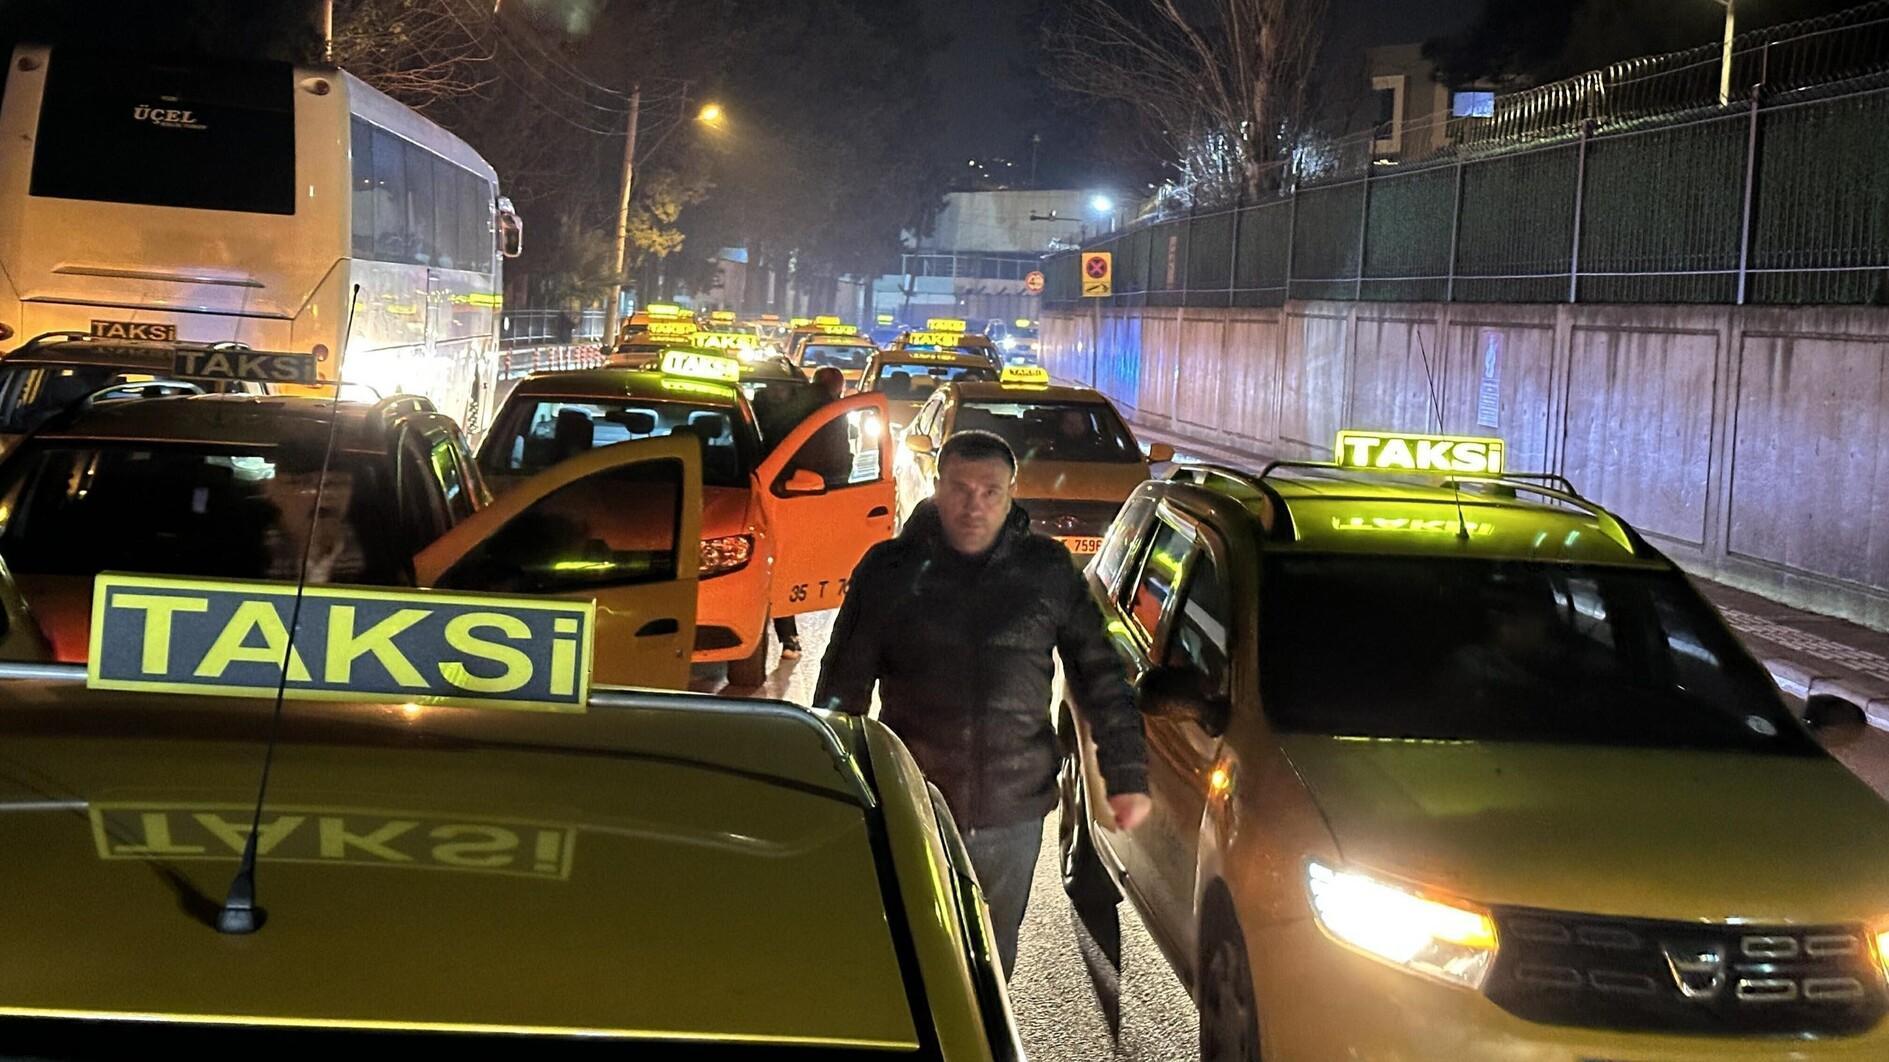 Moord op taxichauffeur in İzmir leidt tot publieke verontwaardiging